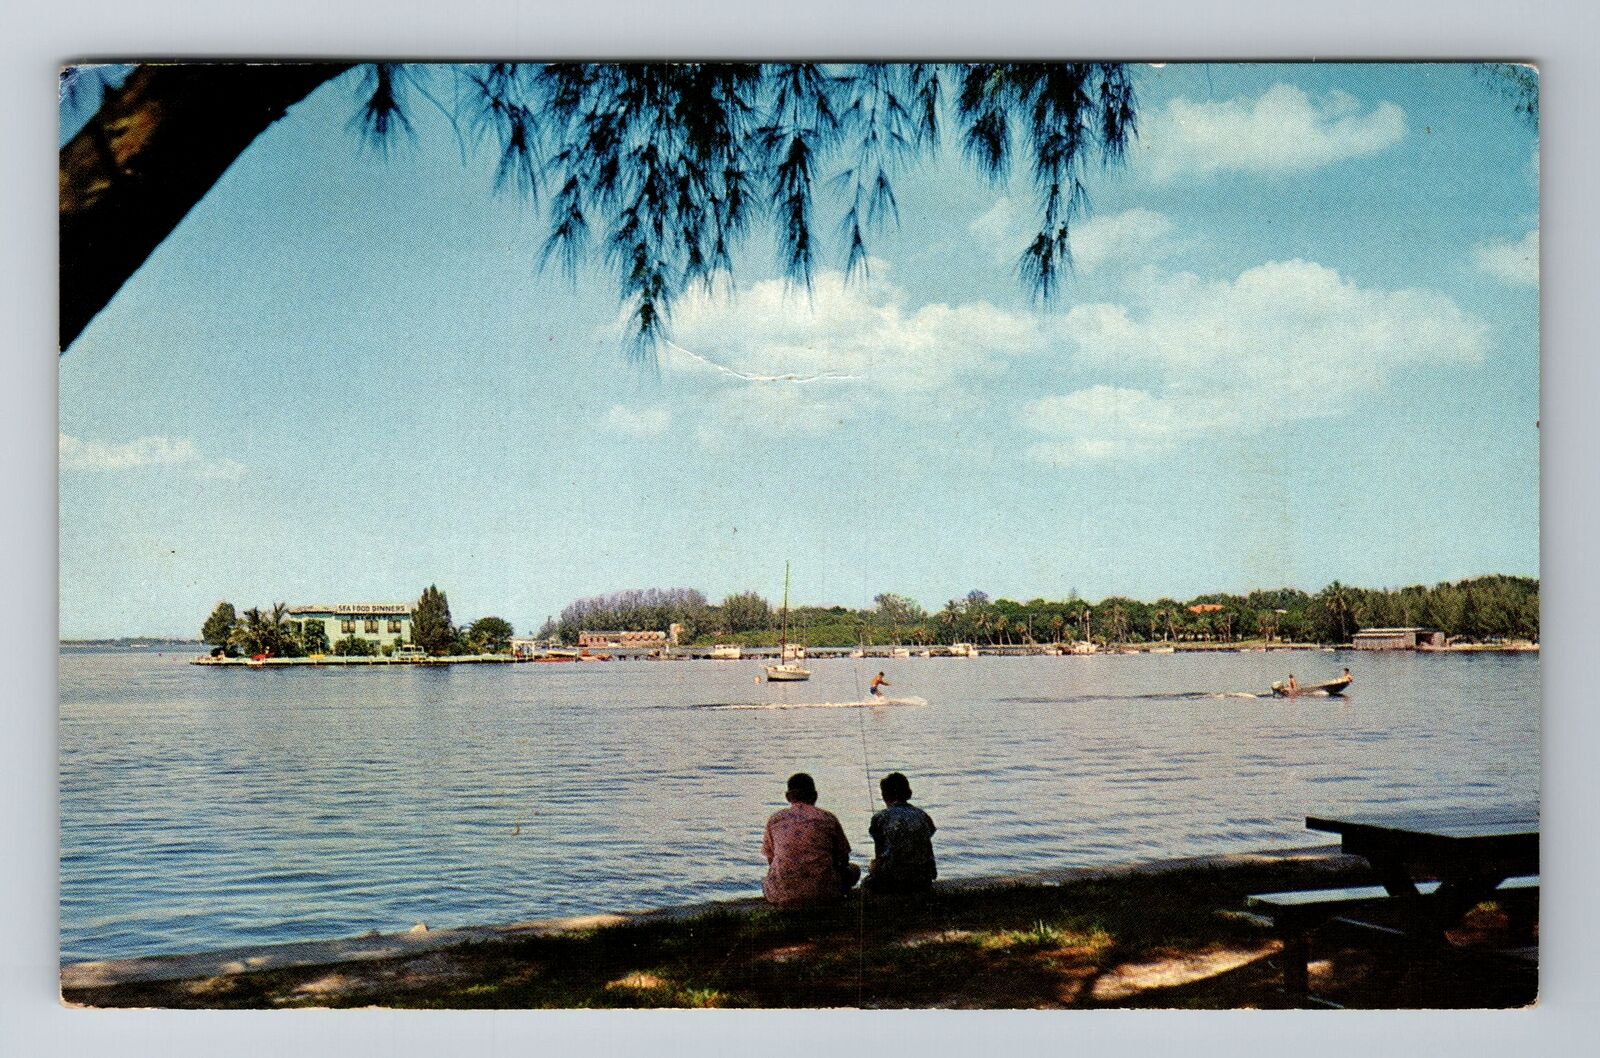 Palmetto, FL-Florida, View From City Park, City Pier c1962, Vintage Postcard